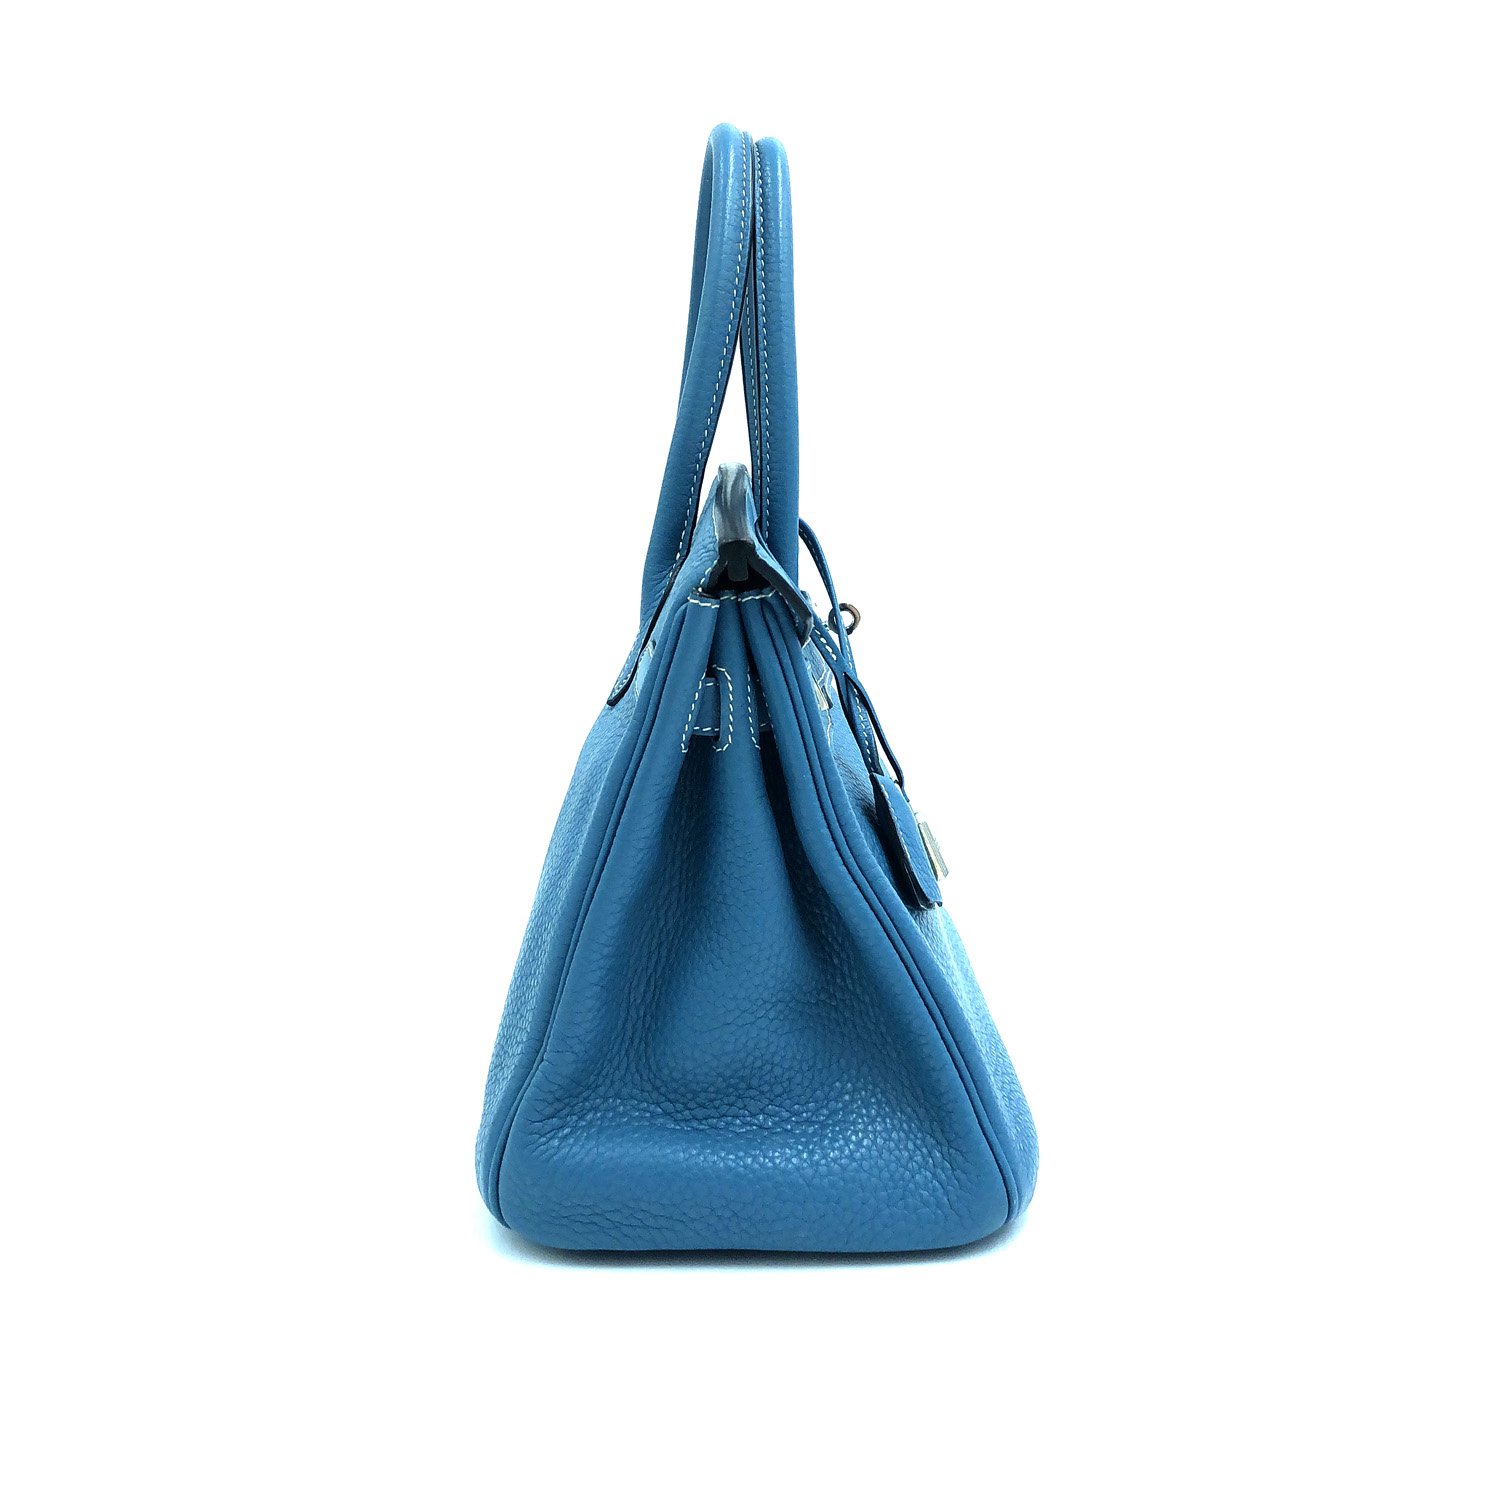 Hermès - Authenticated Birkin 30 Handbag - Leather Blue Plain for Women, Very Good Condition